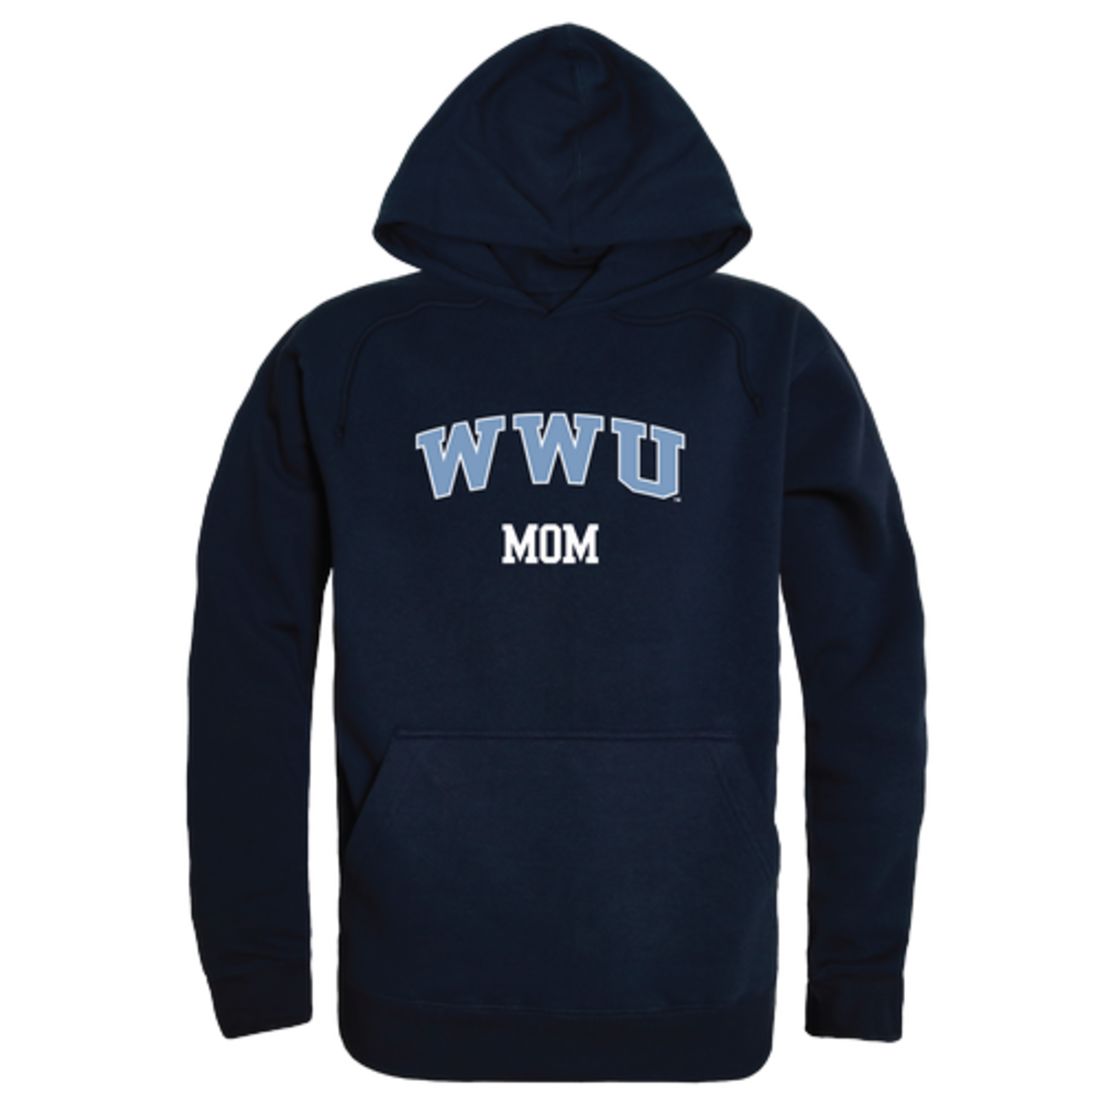 WWU Western Washington University Vikings Mom Fleece Hoodie Sweatshirts Heather Grey-Campus-Wardrobe